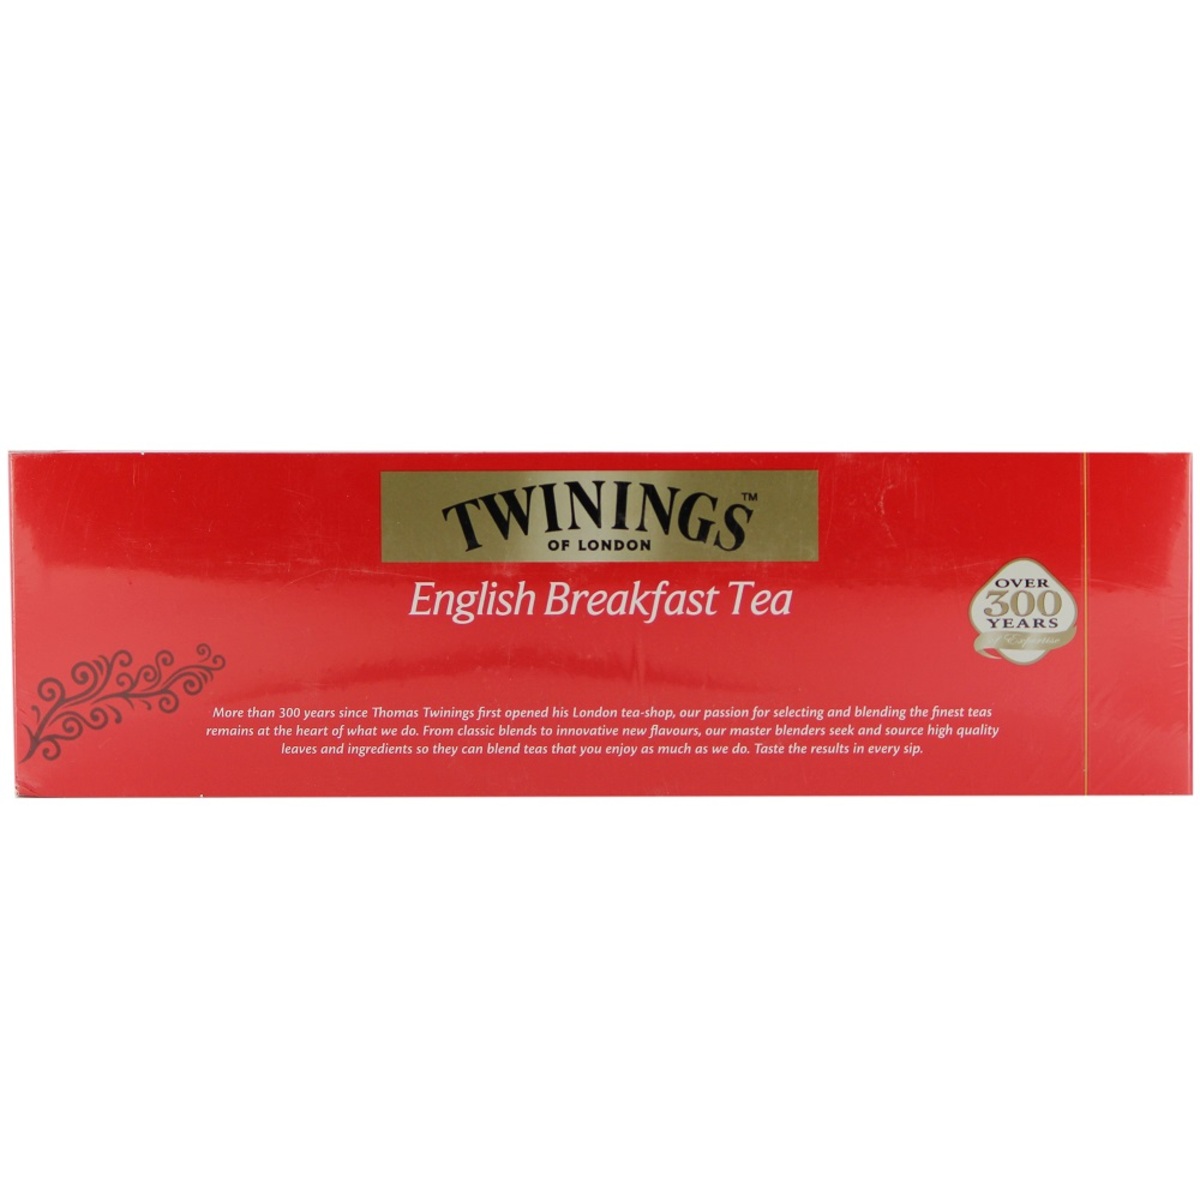 Twinings English Breakfast Tea Bag 100's